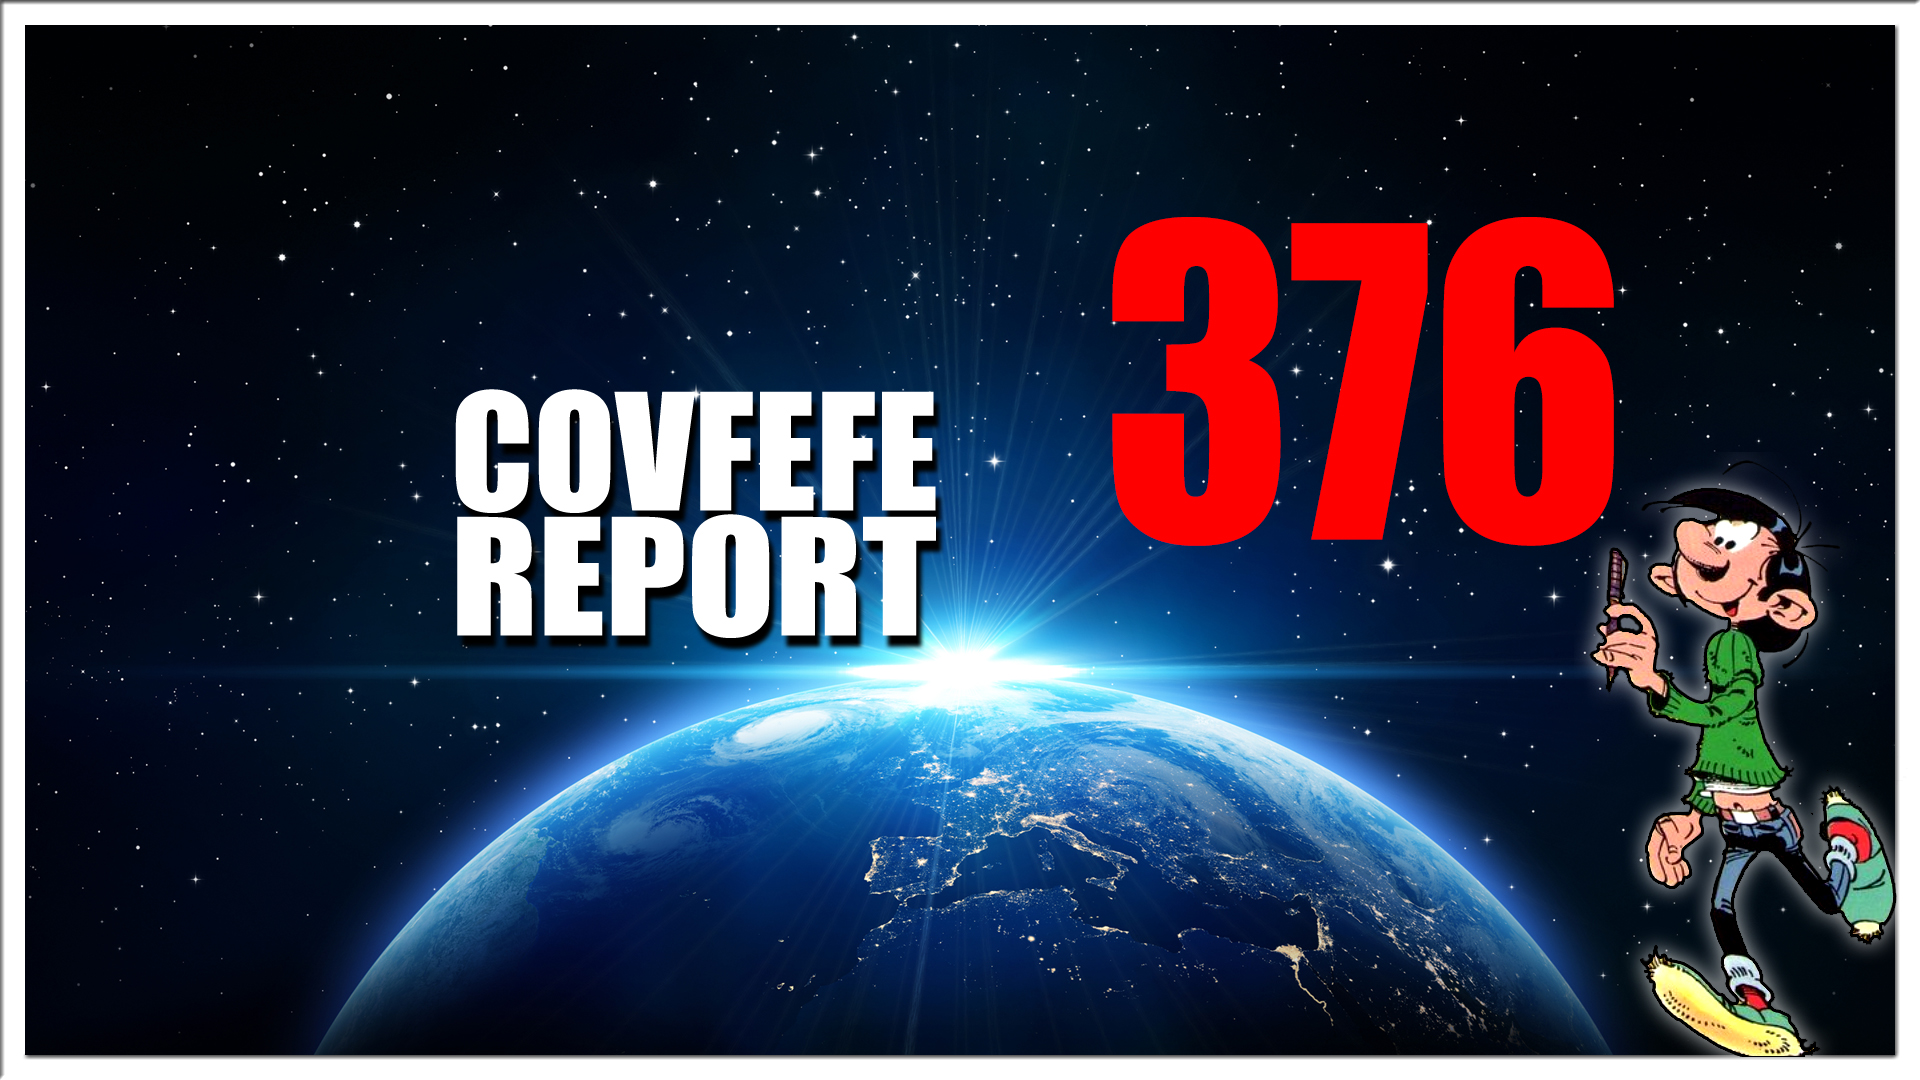 Covfefe Report 376. Paytriots, Zelfde draaiboek, Final stage